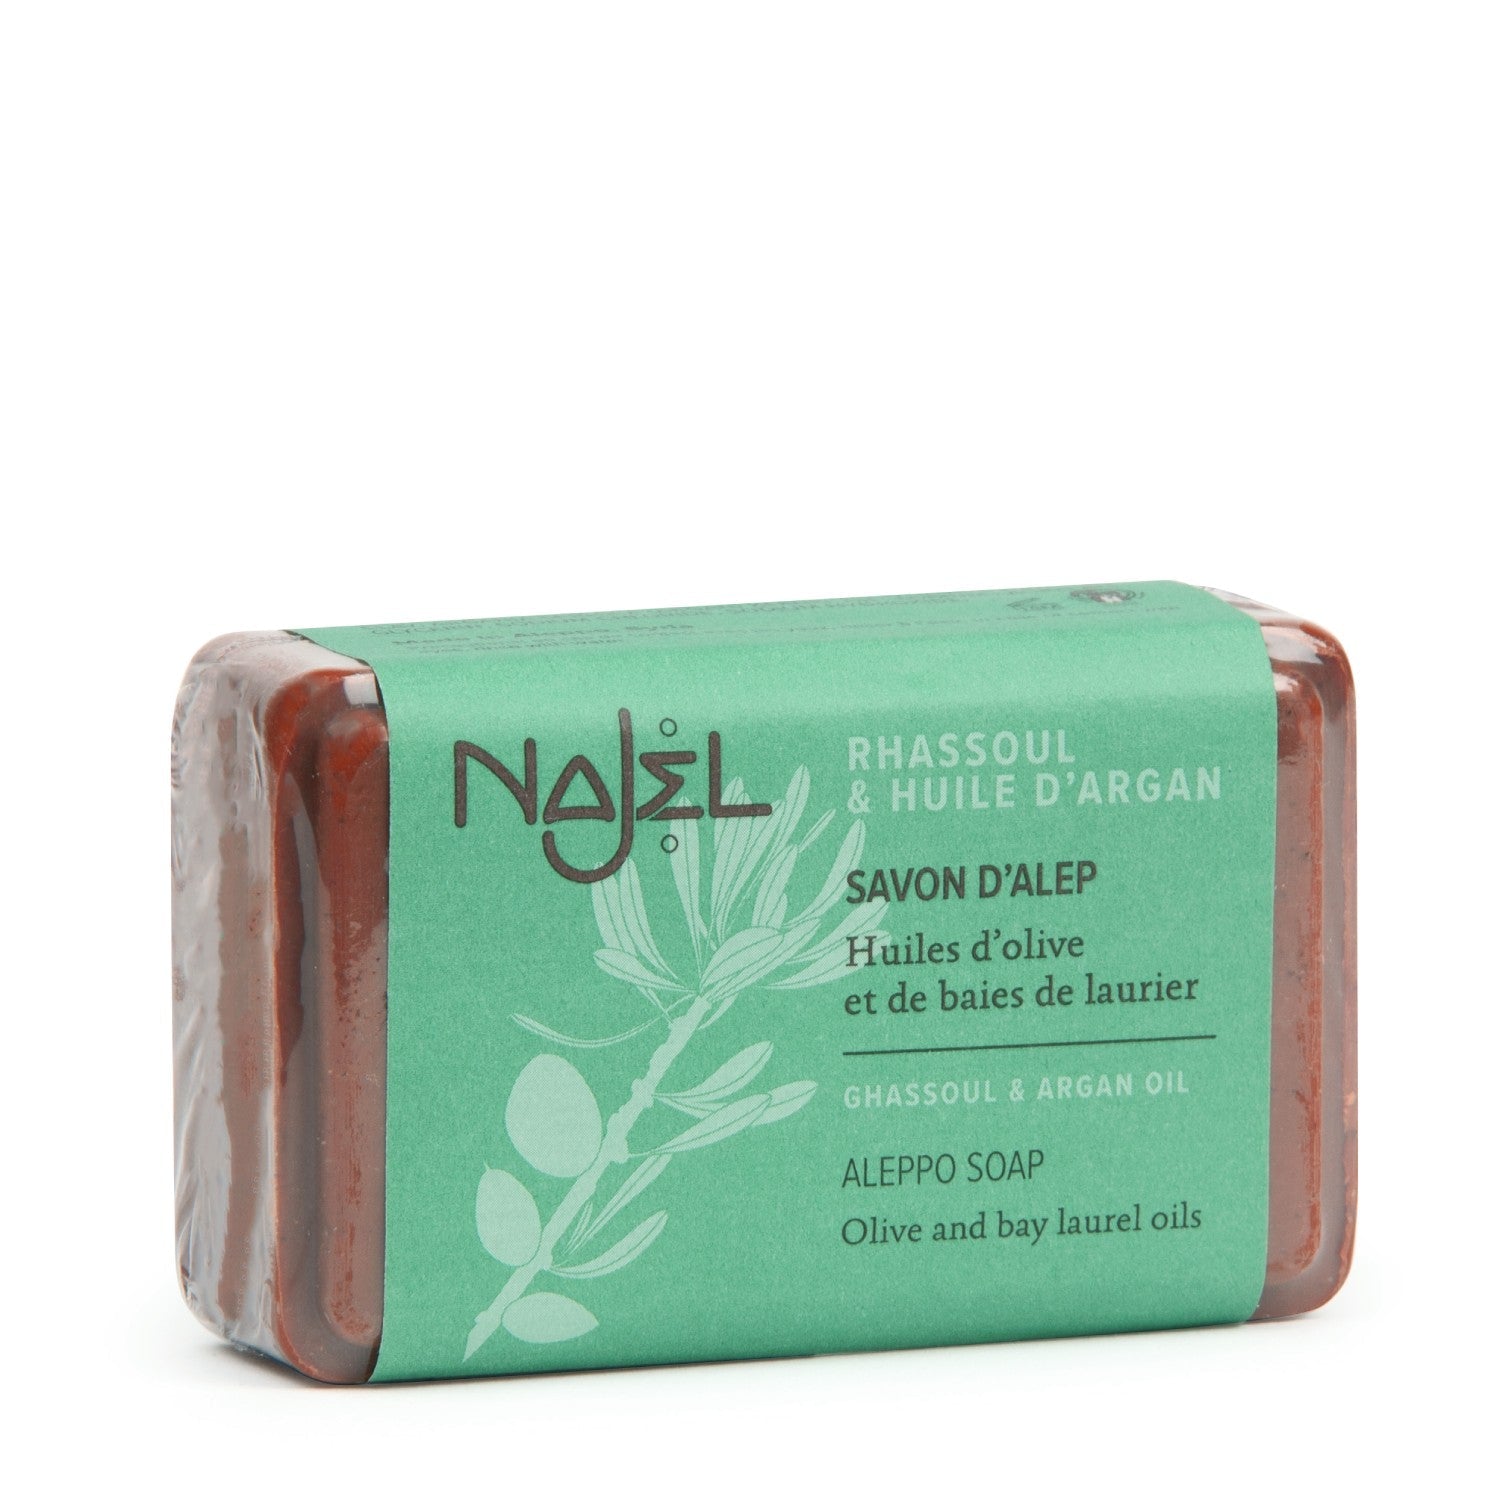 NAJEL Organic Skincare - Aleppo Soap Ghassoul &amp; Argan Oil, 100g, Organic, Vegan